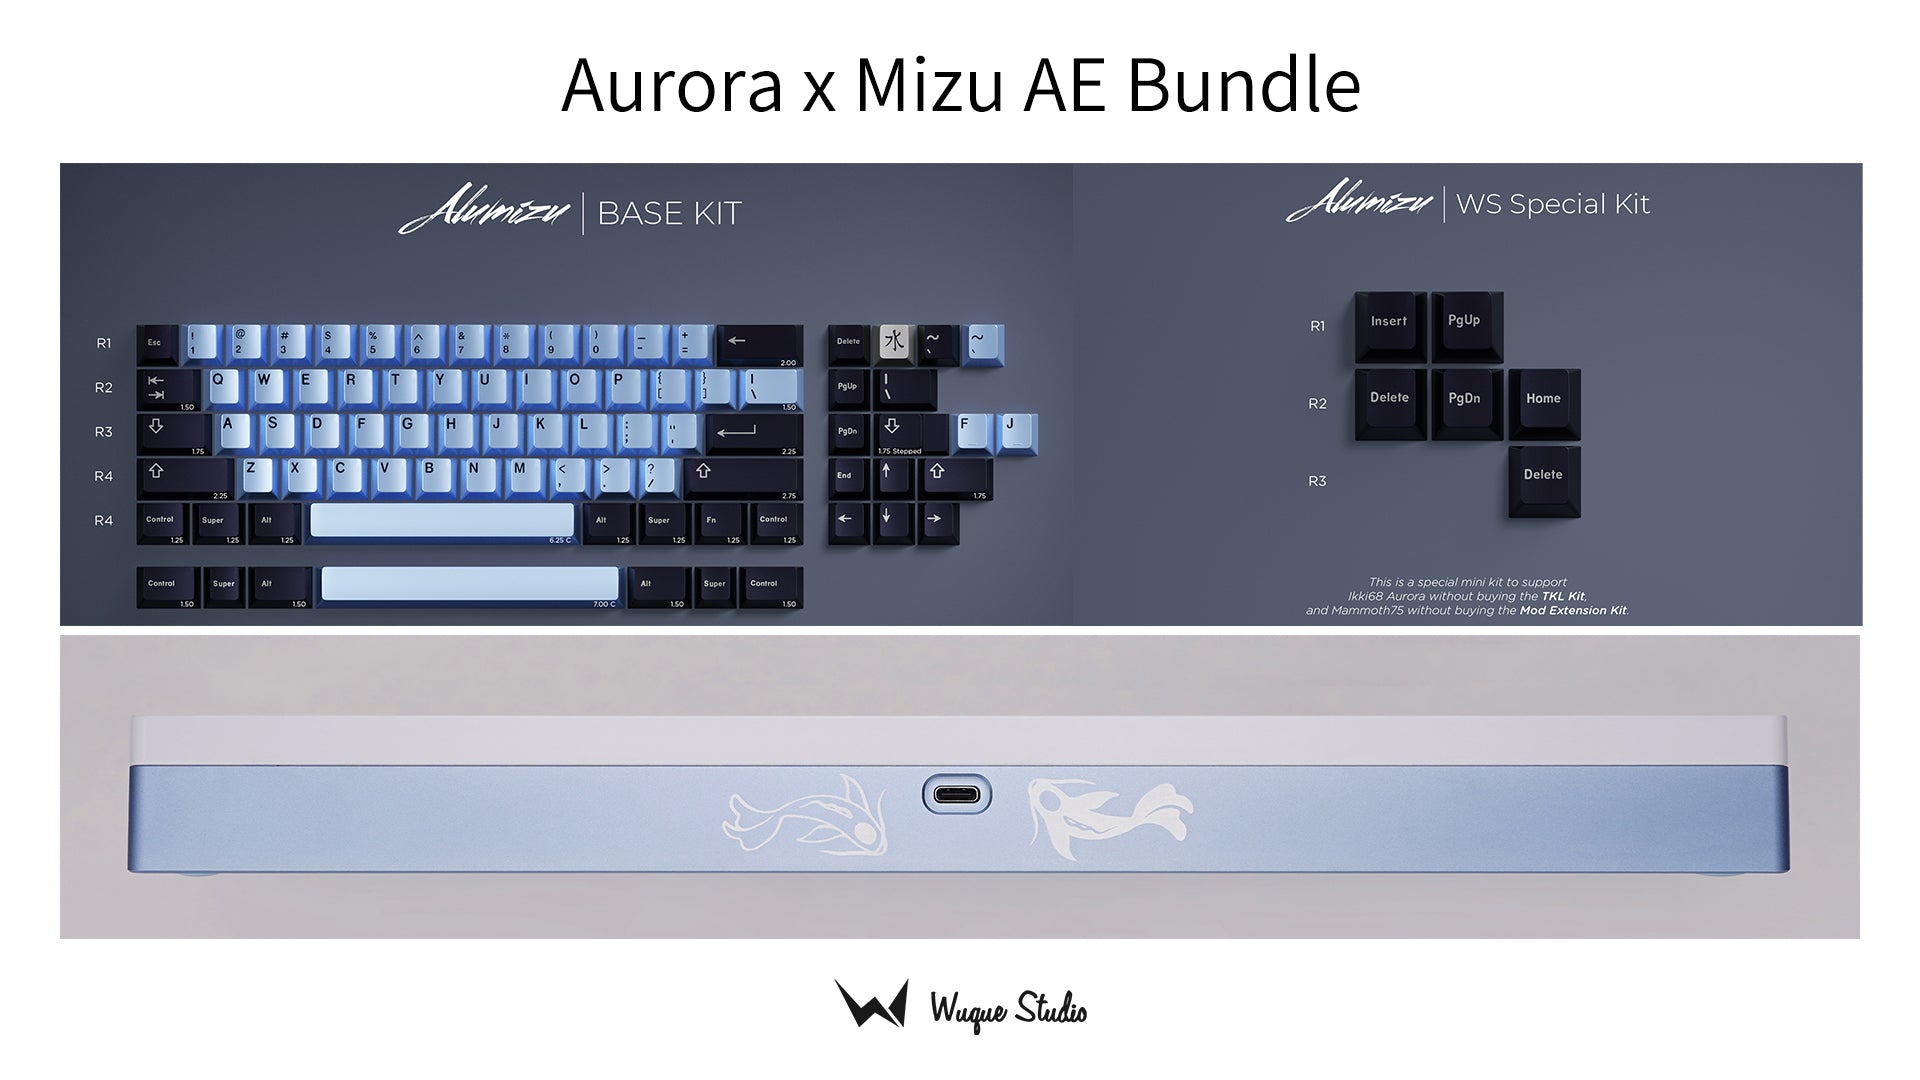 Aurora x Mizu AE [In stock]